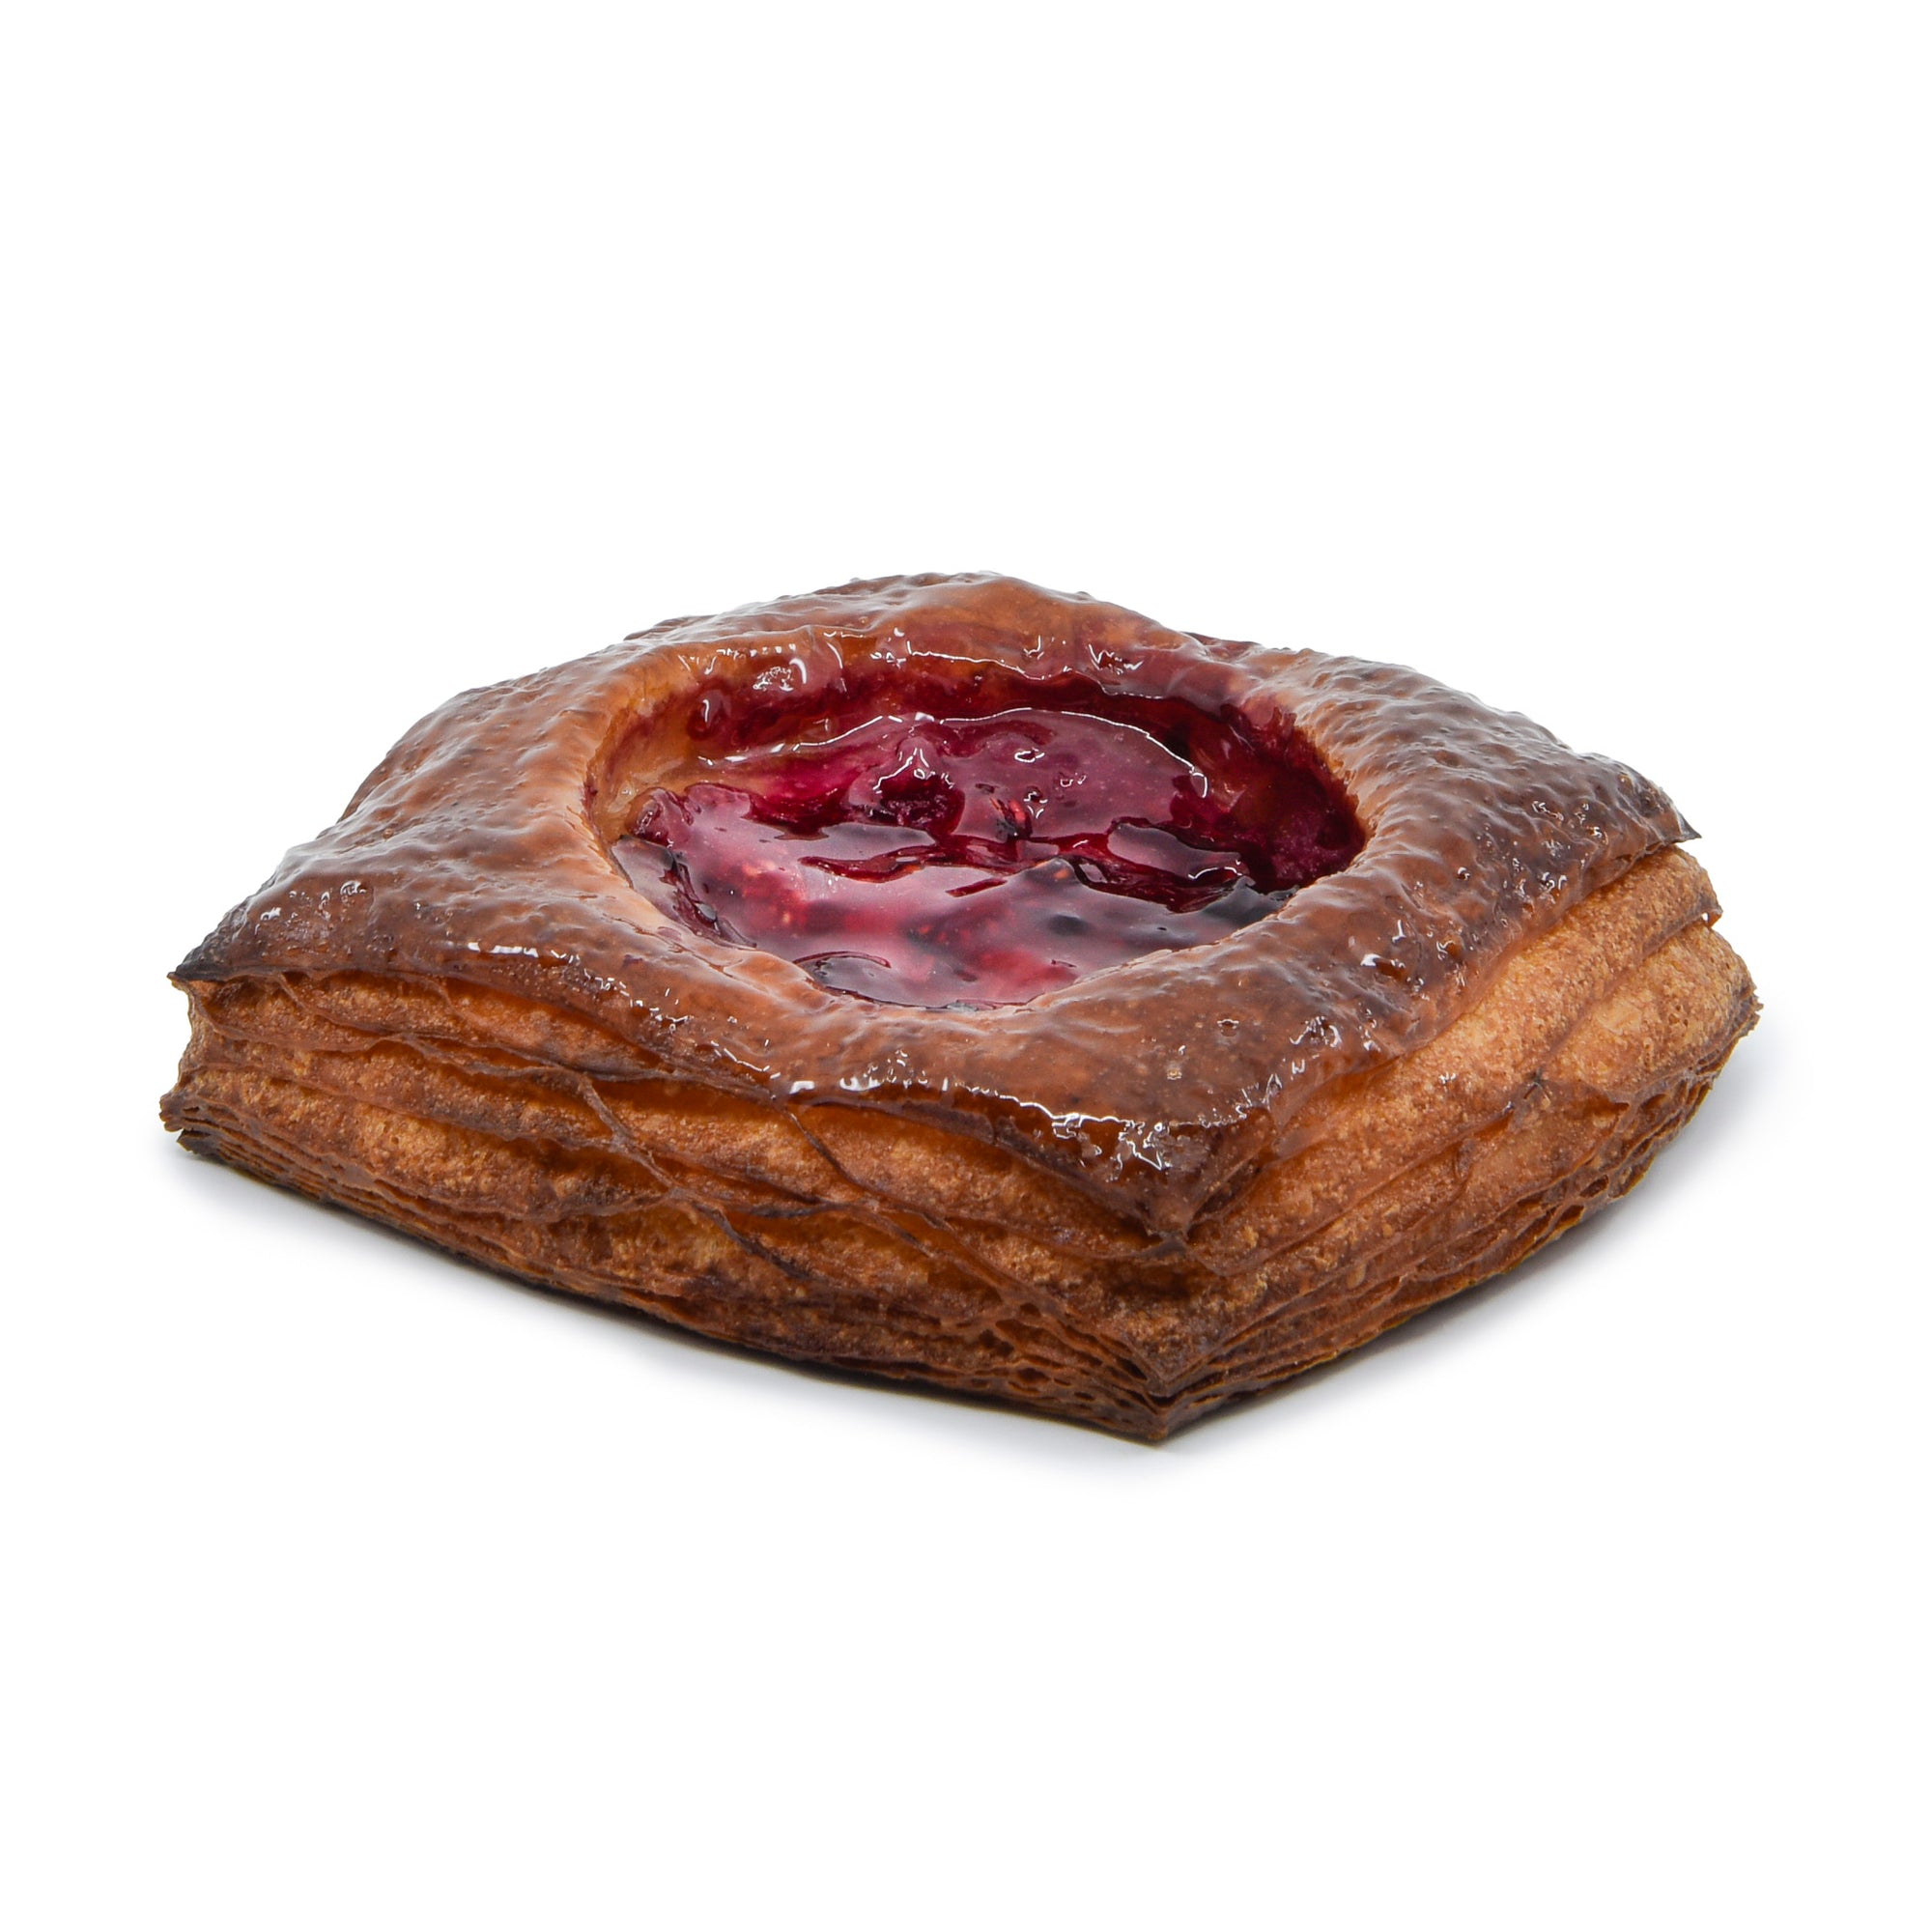 Le fournil bakery danoise aux framboises danish with raspberries